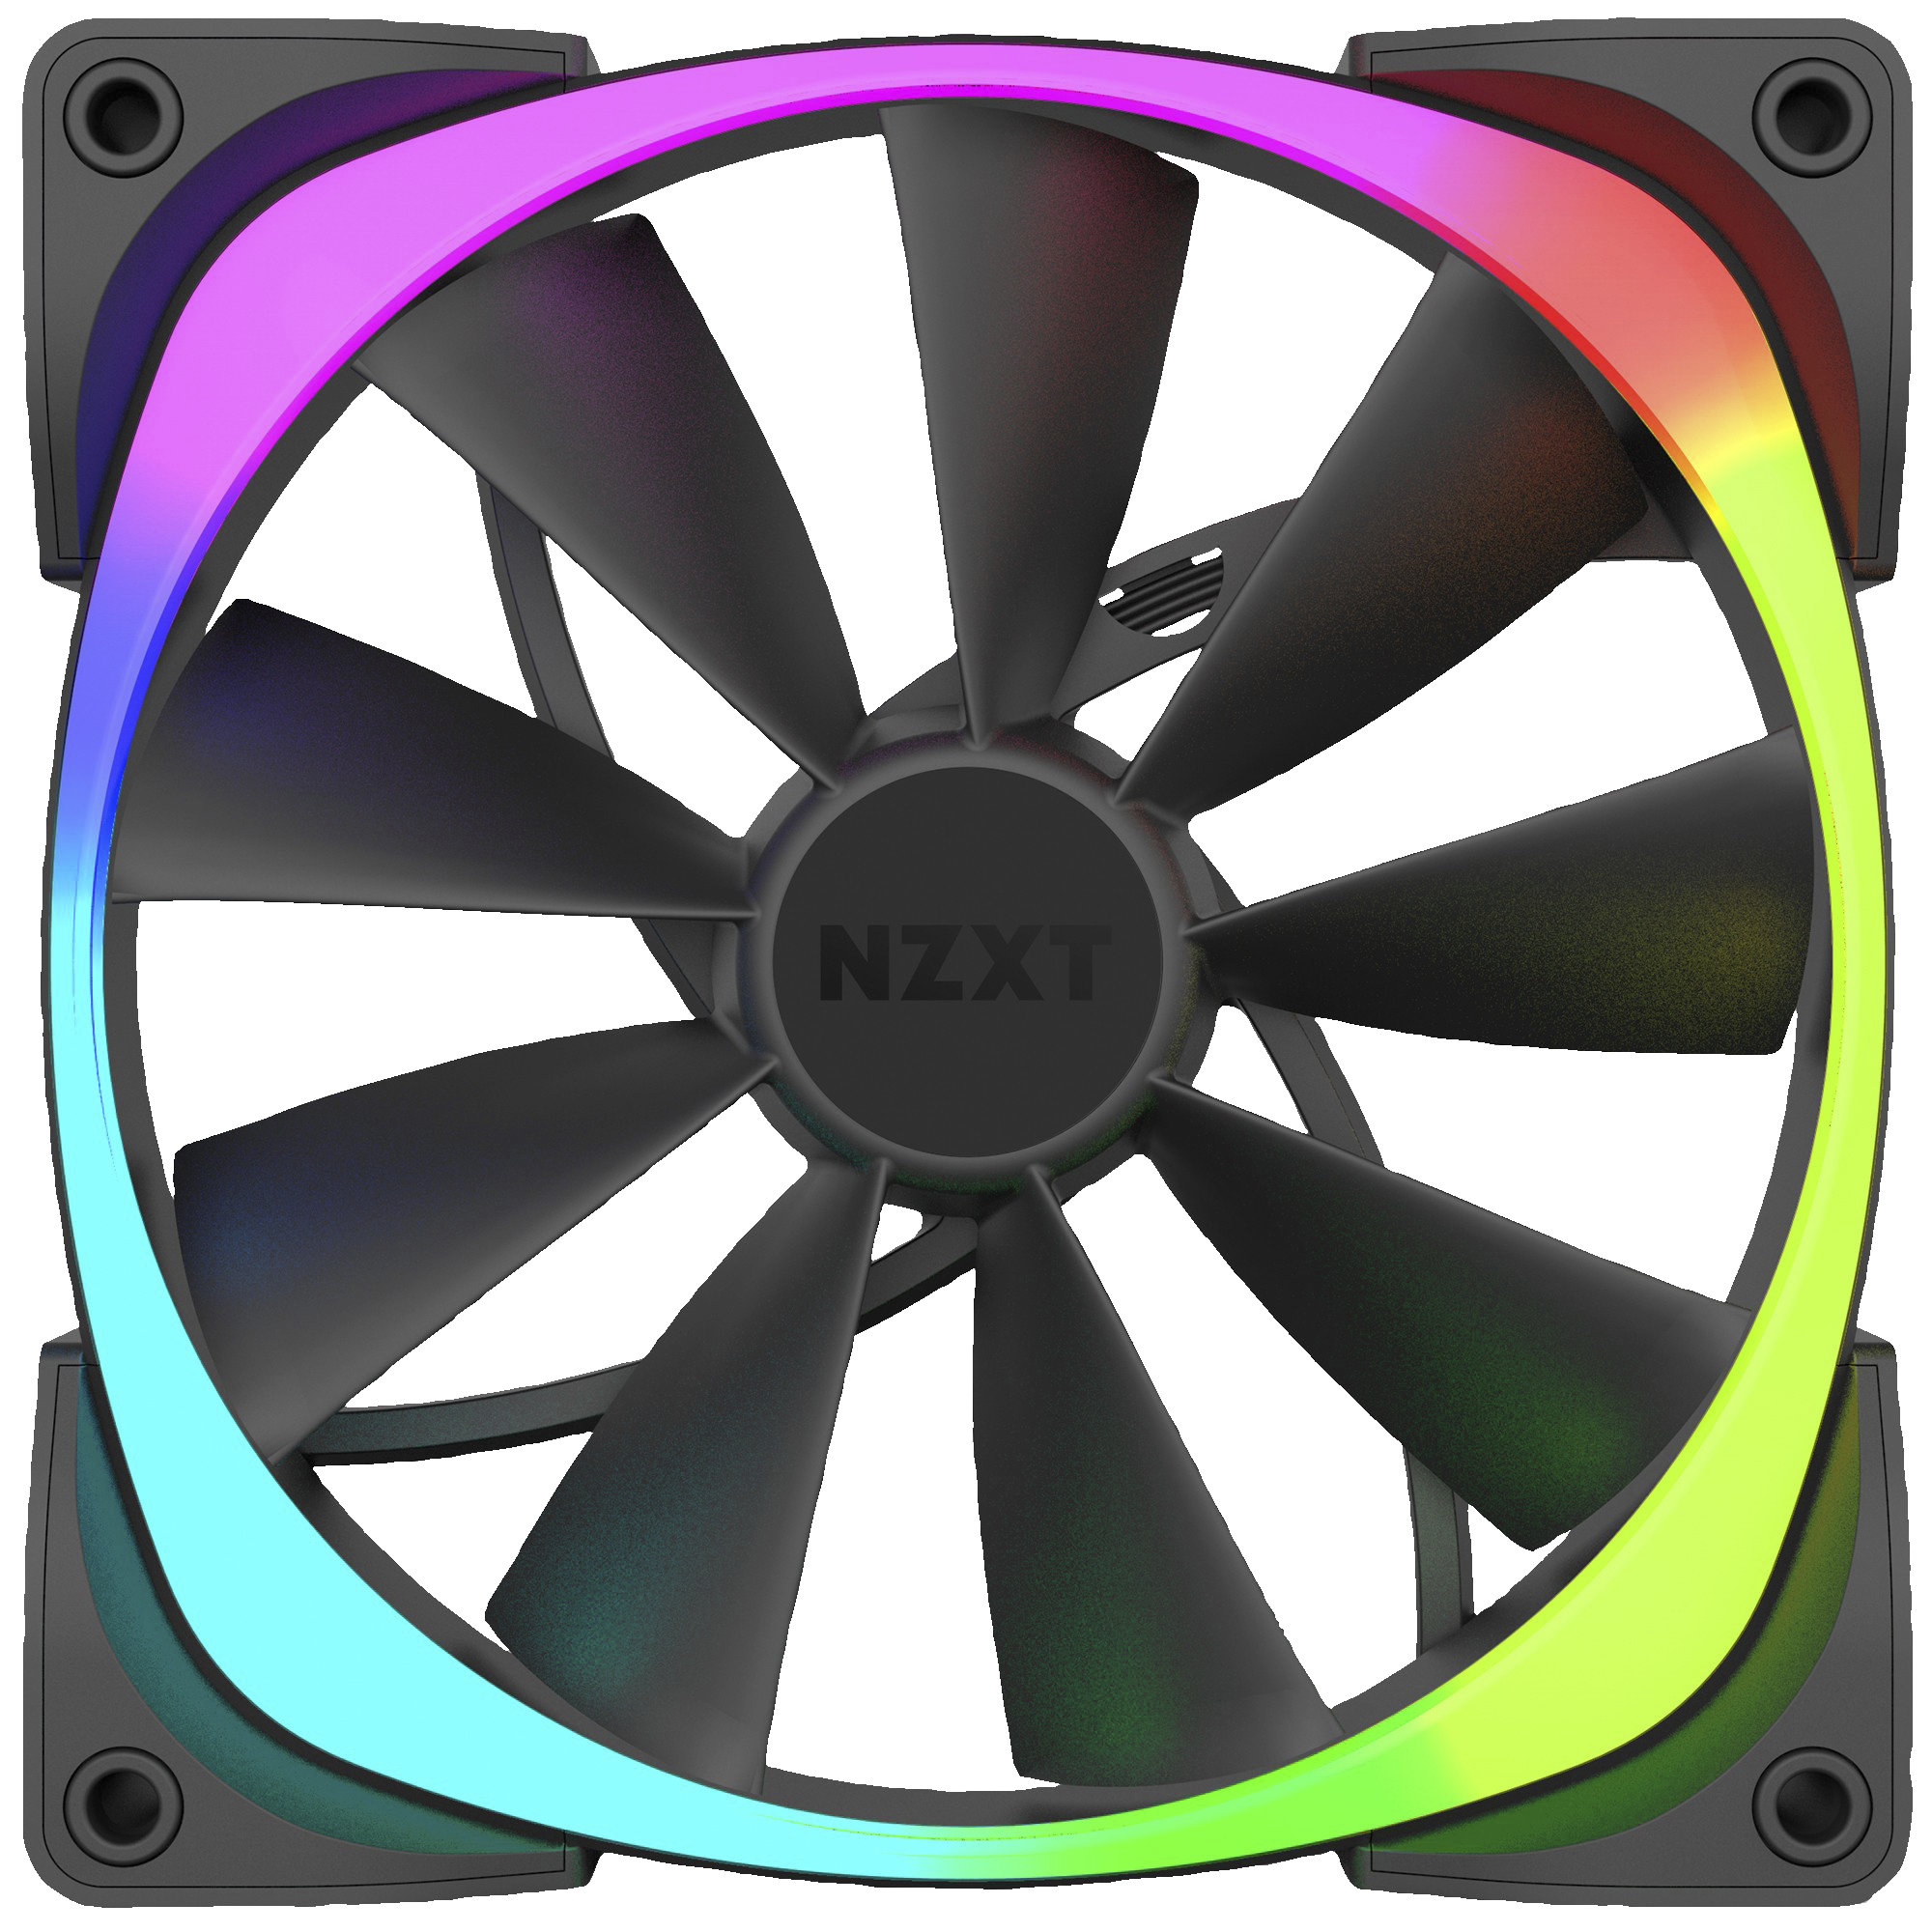 NZXT Aer RGB datorfläkt 140 mm - Datorkomponenter - Elgiganten